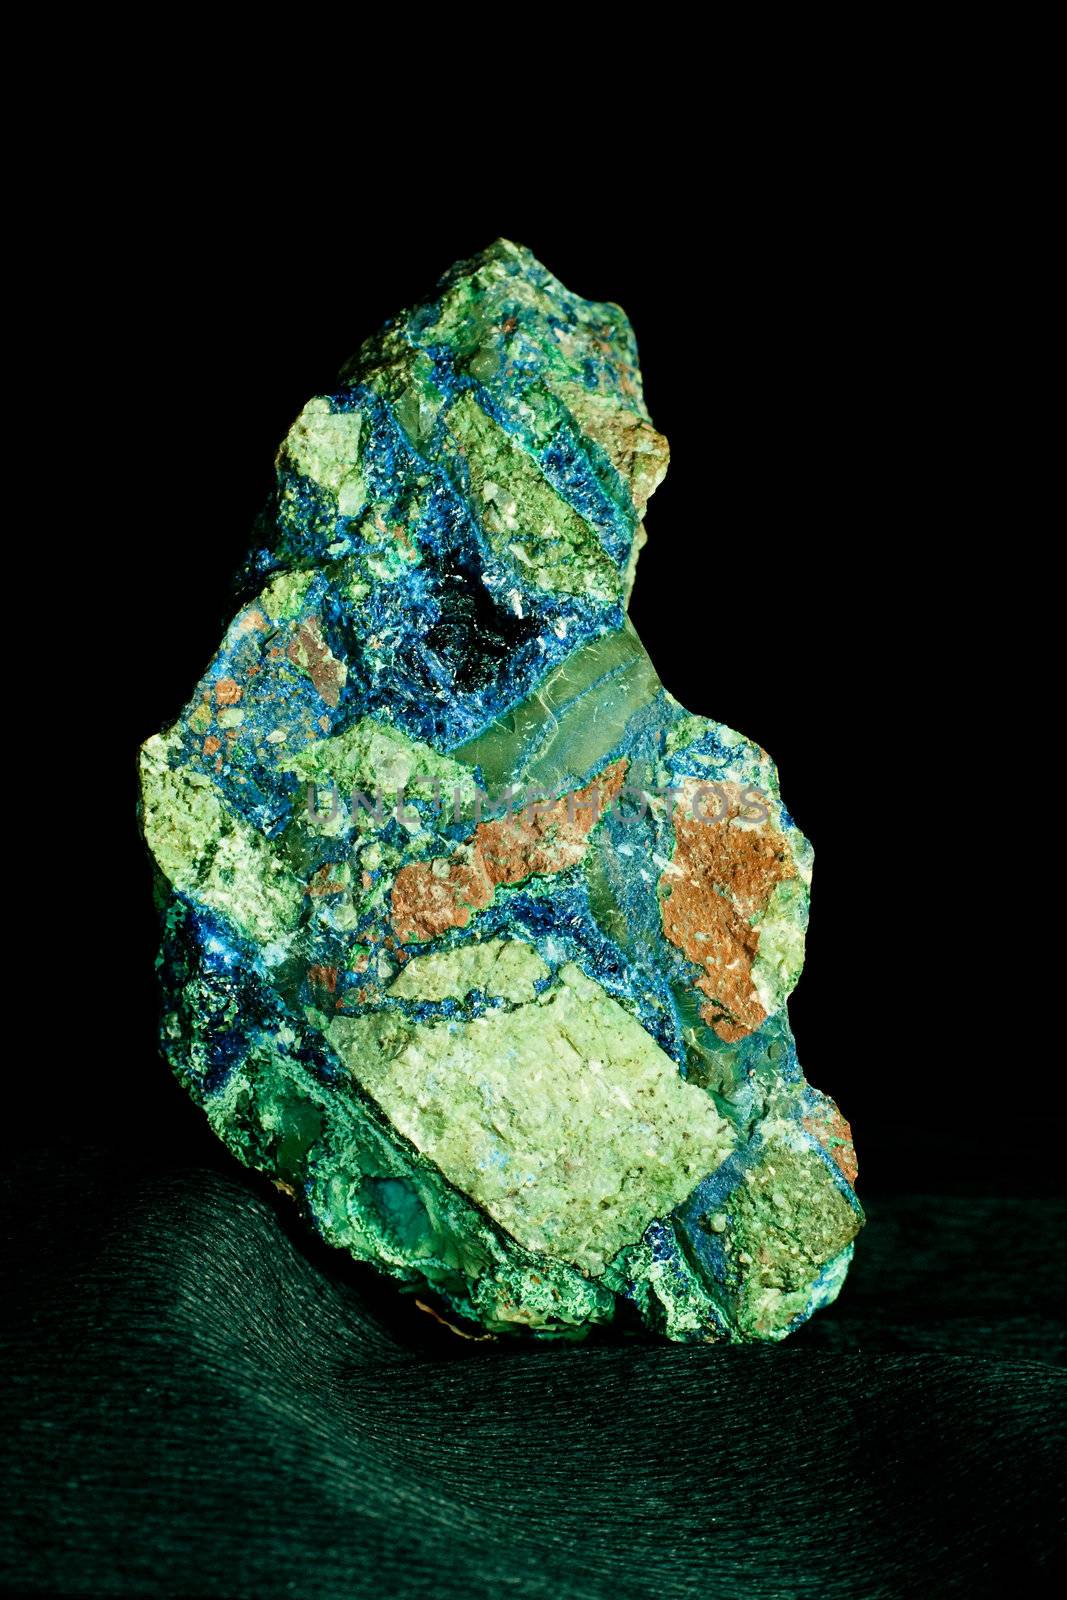 Malachite azurite conglomerate found in Arizona US by PiLens